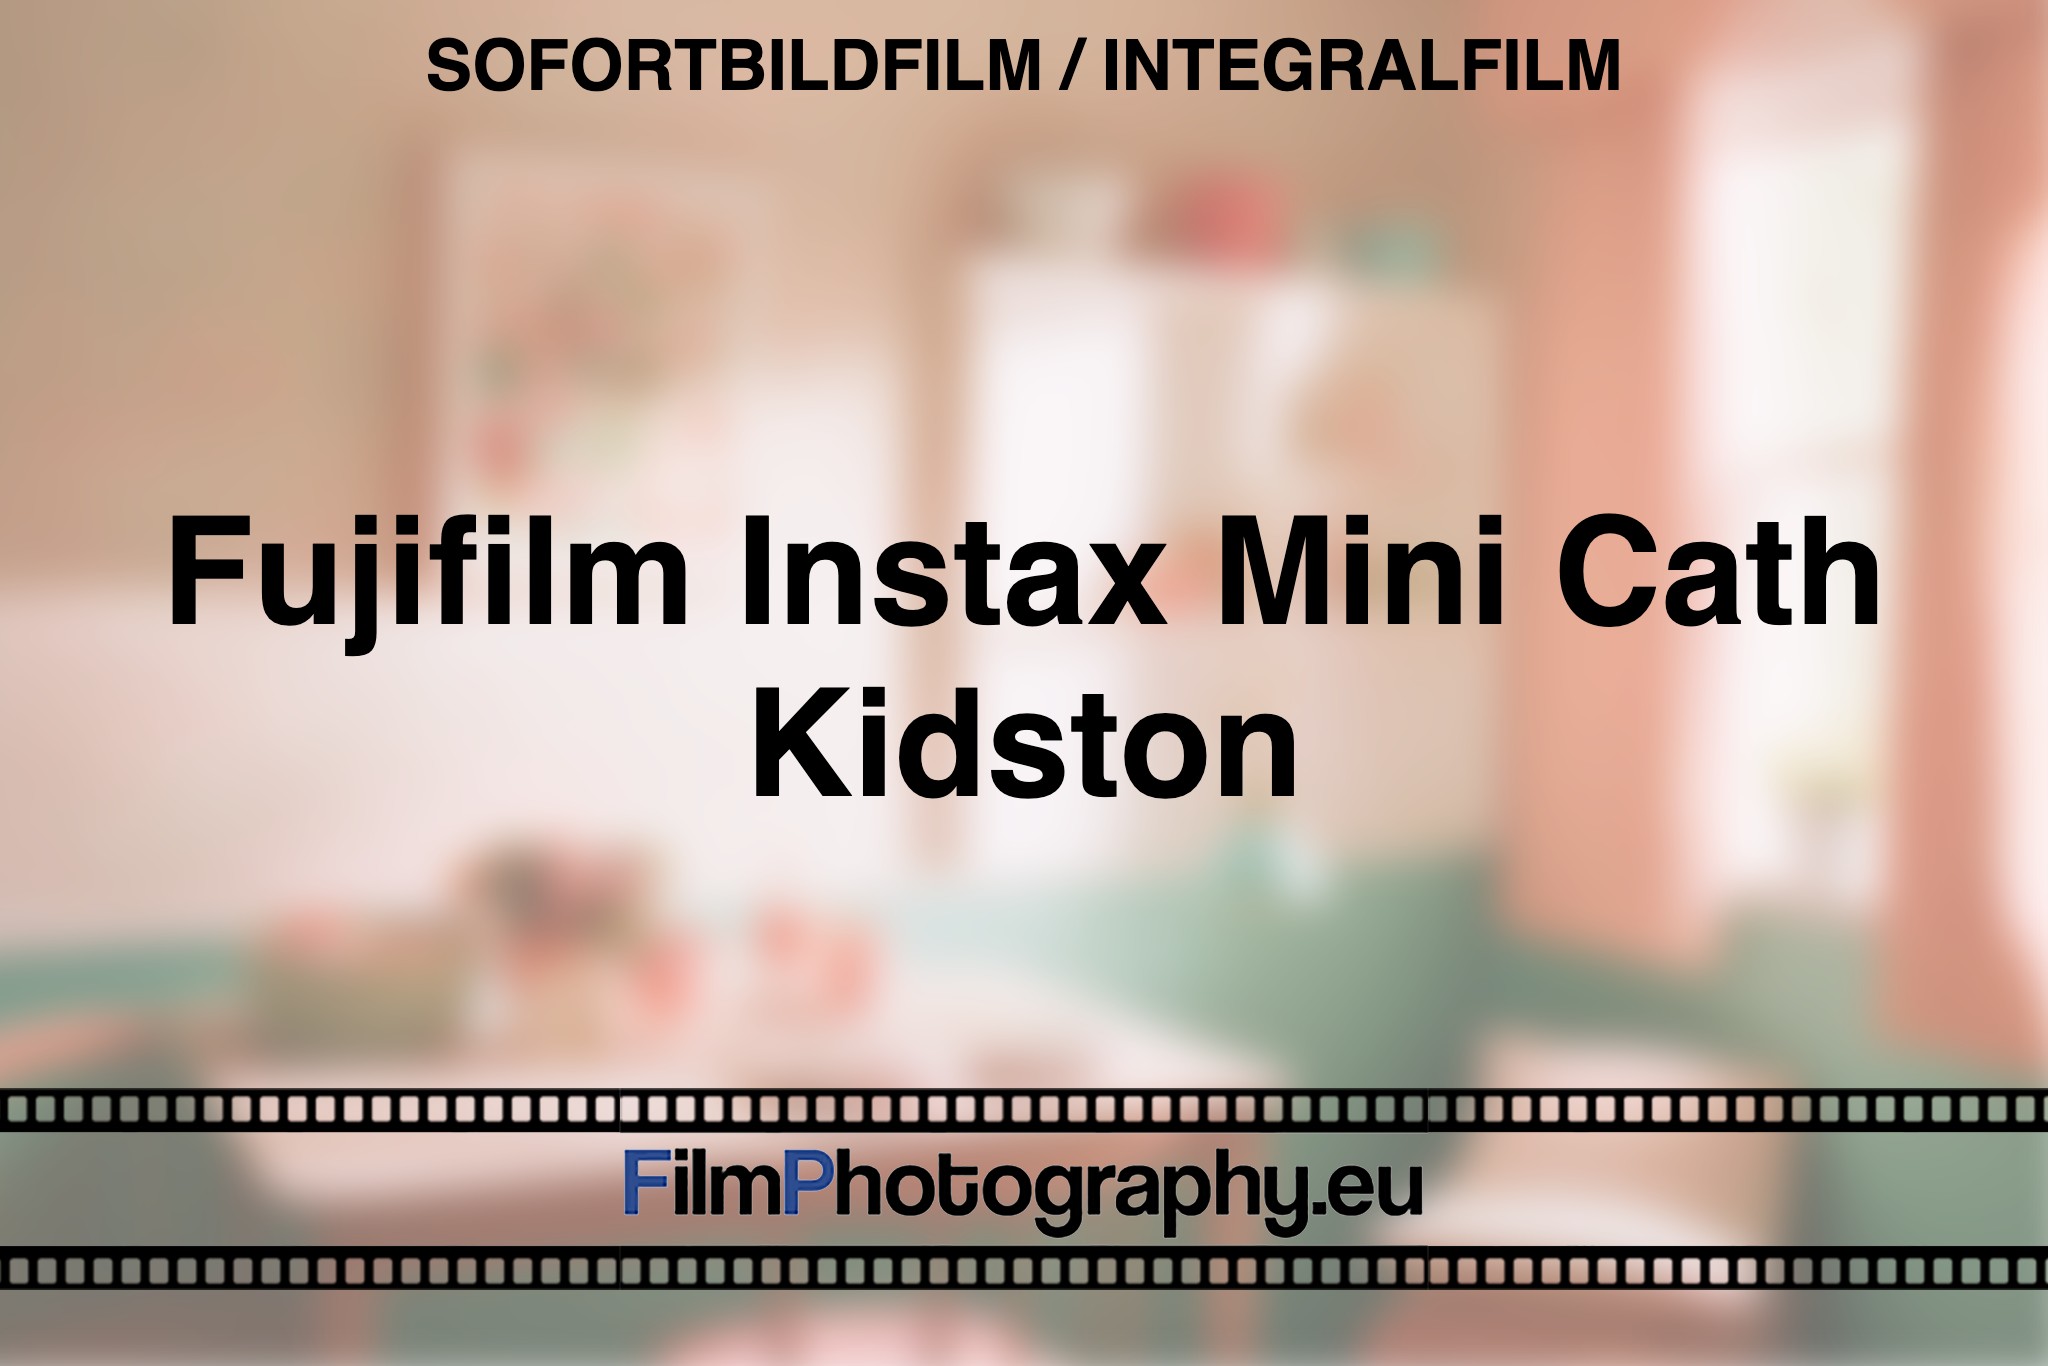 fujifilm-instax-mini-cath-kidston-sofortbildfilm-integralfilm-fp-bnv